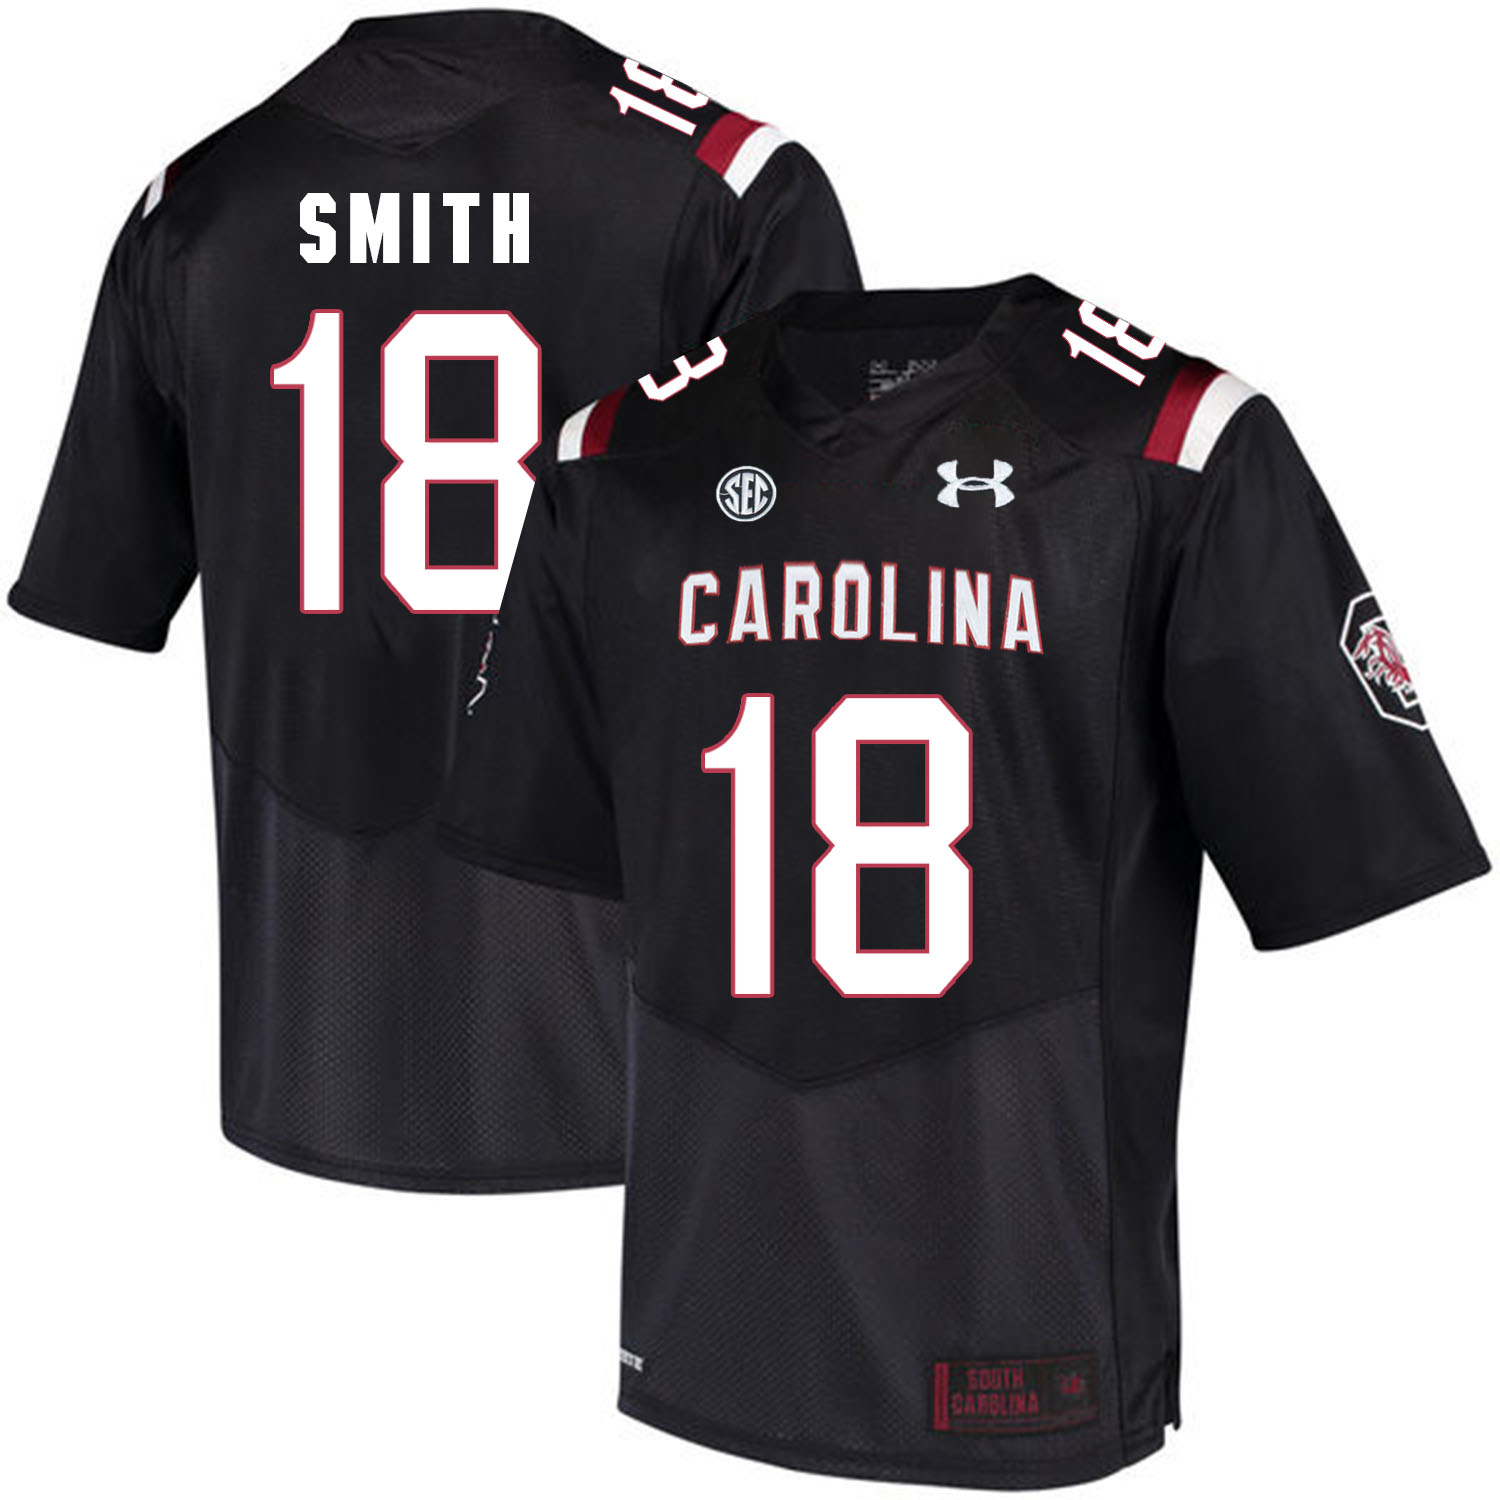 South Carolina Gamecocks 18 OrTre Smith Black College Football Jersey